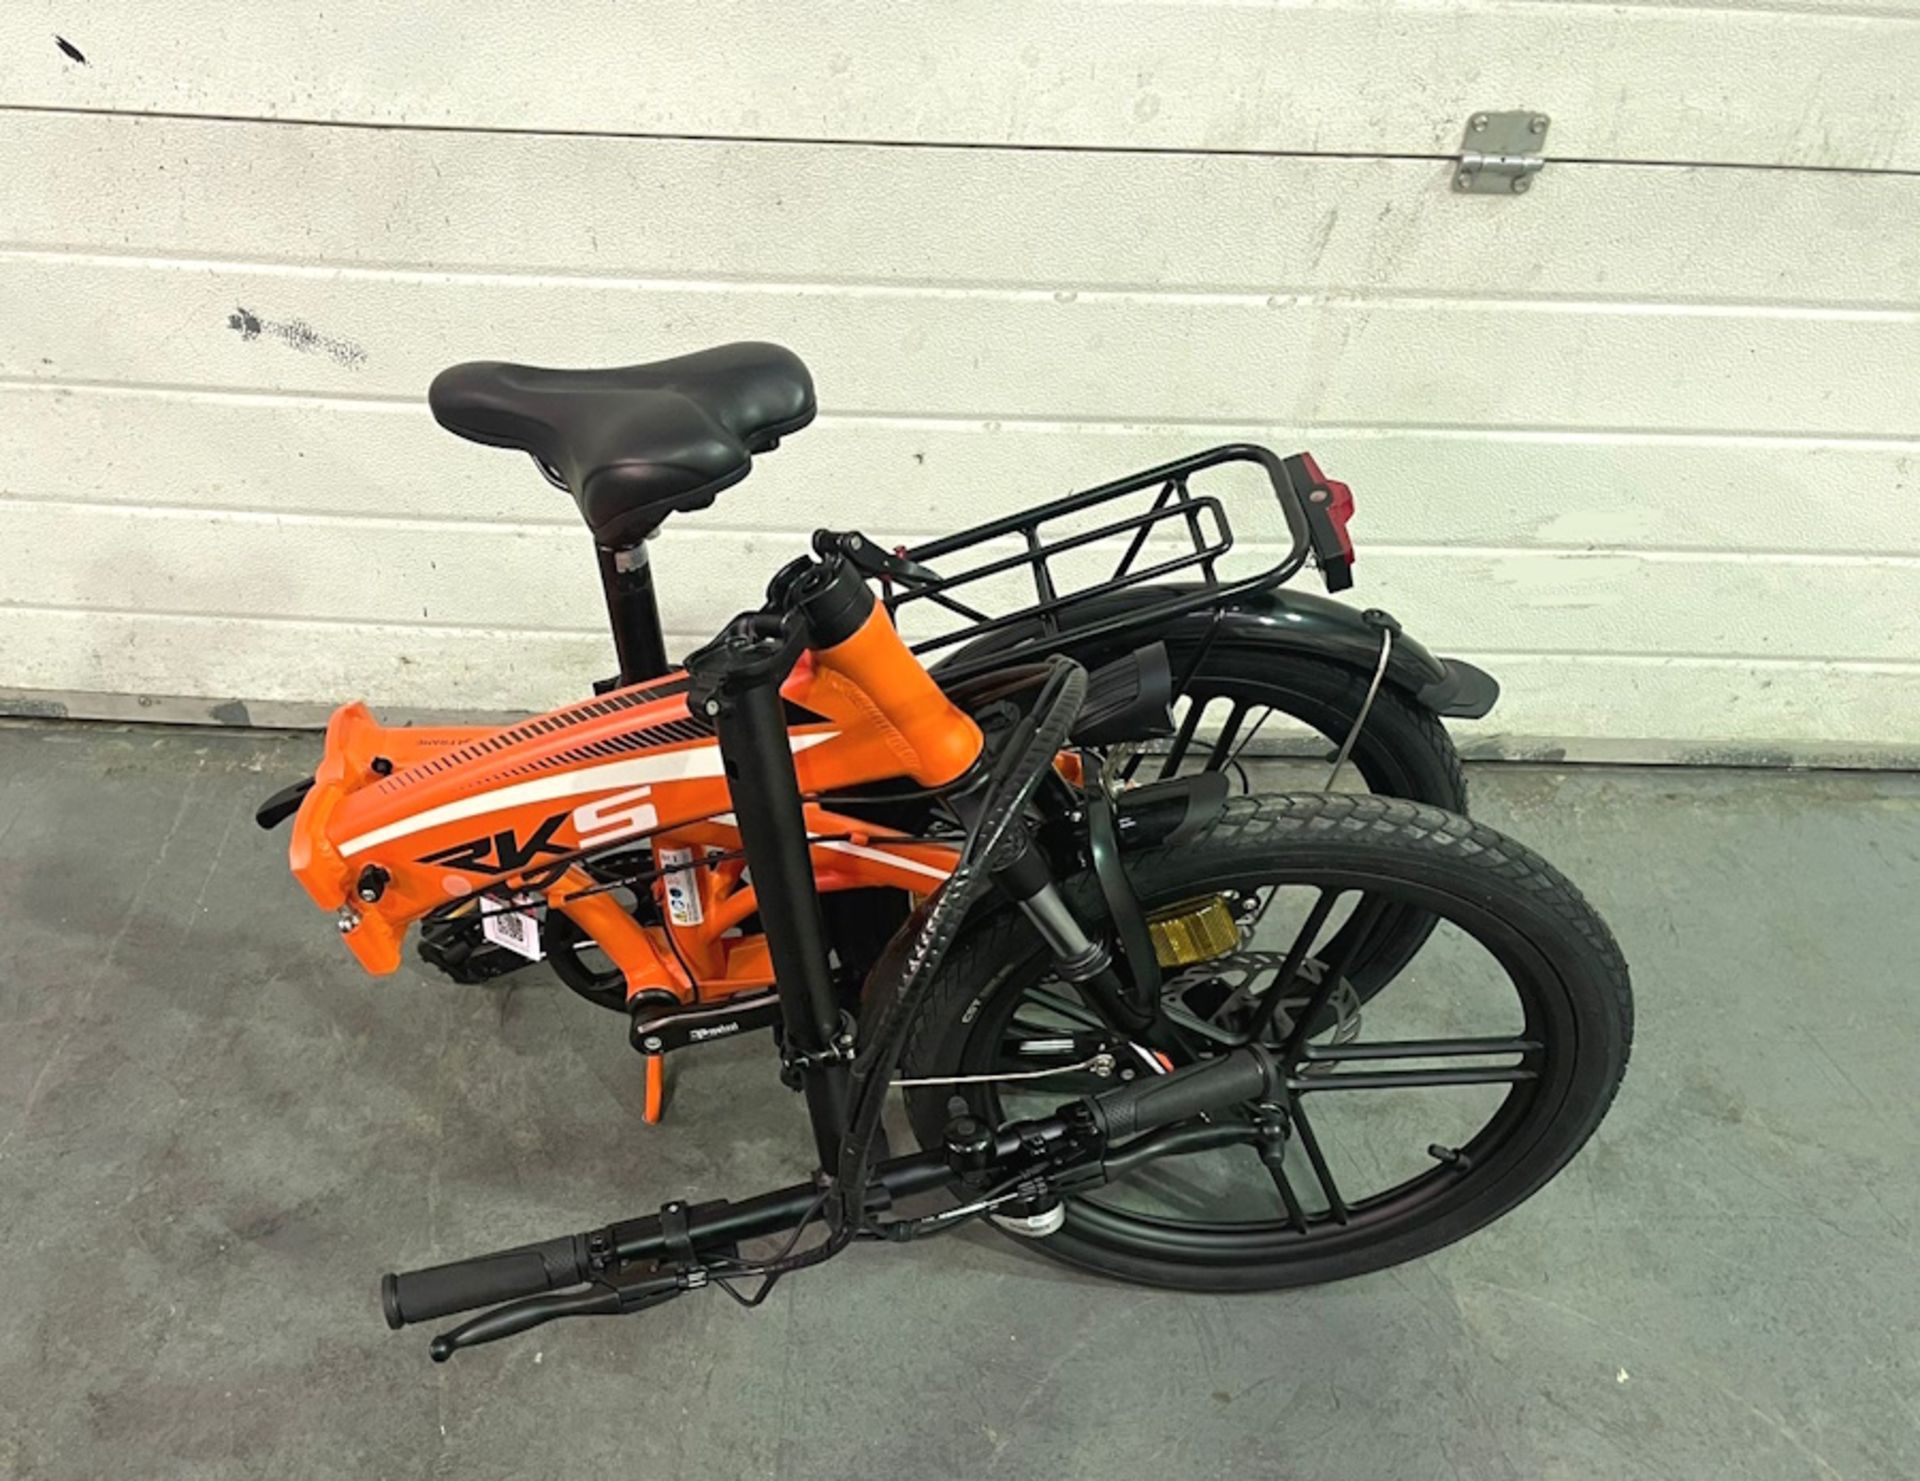 RKS TNT 5 Pro folding e-bike, orange, - Image 6 of 6